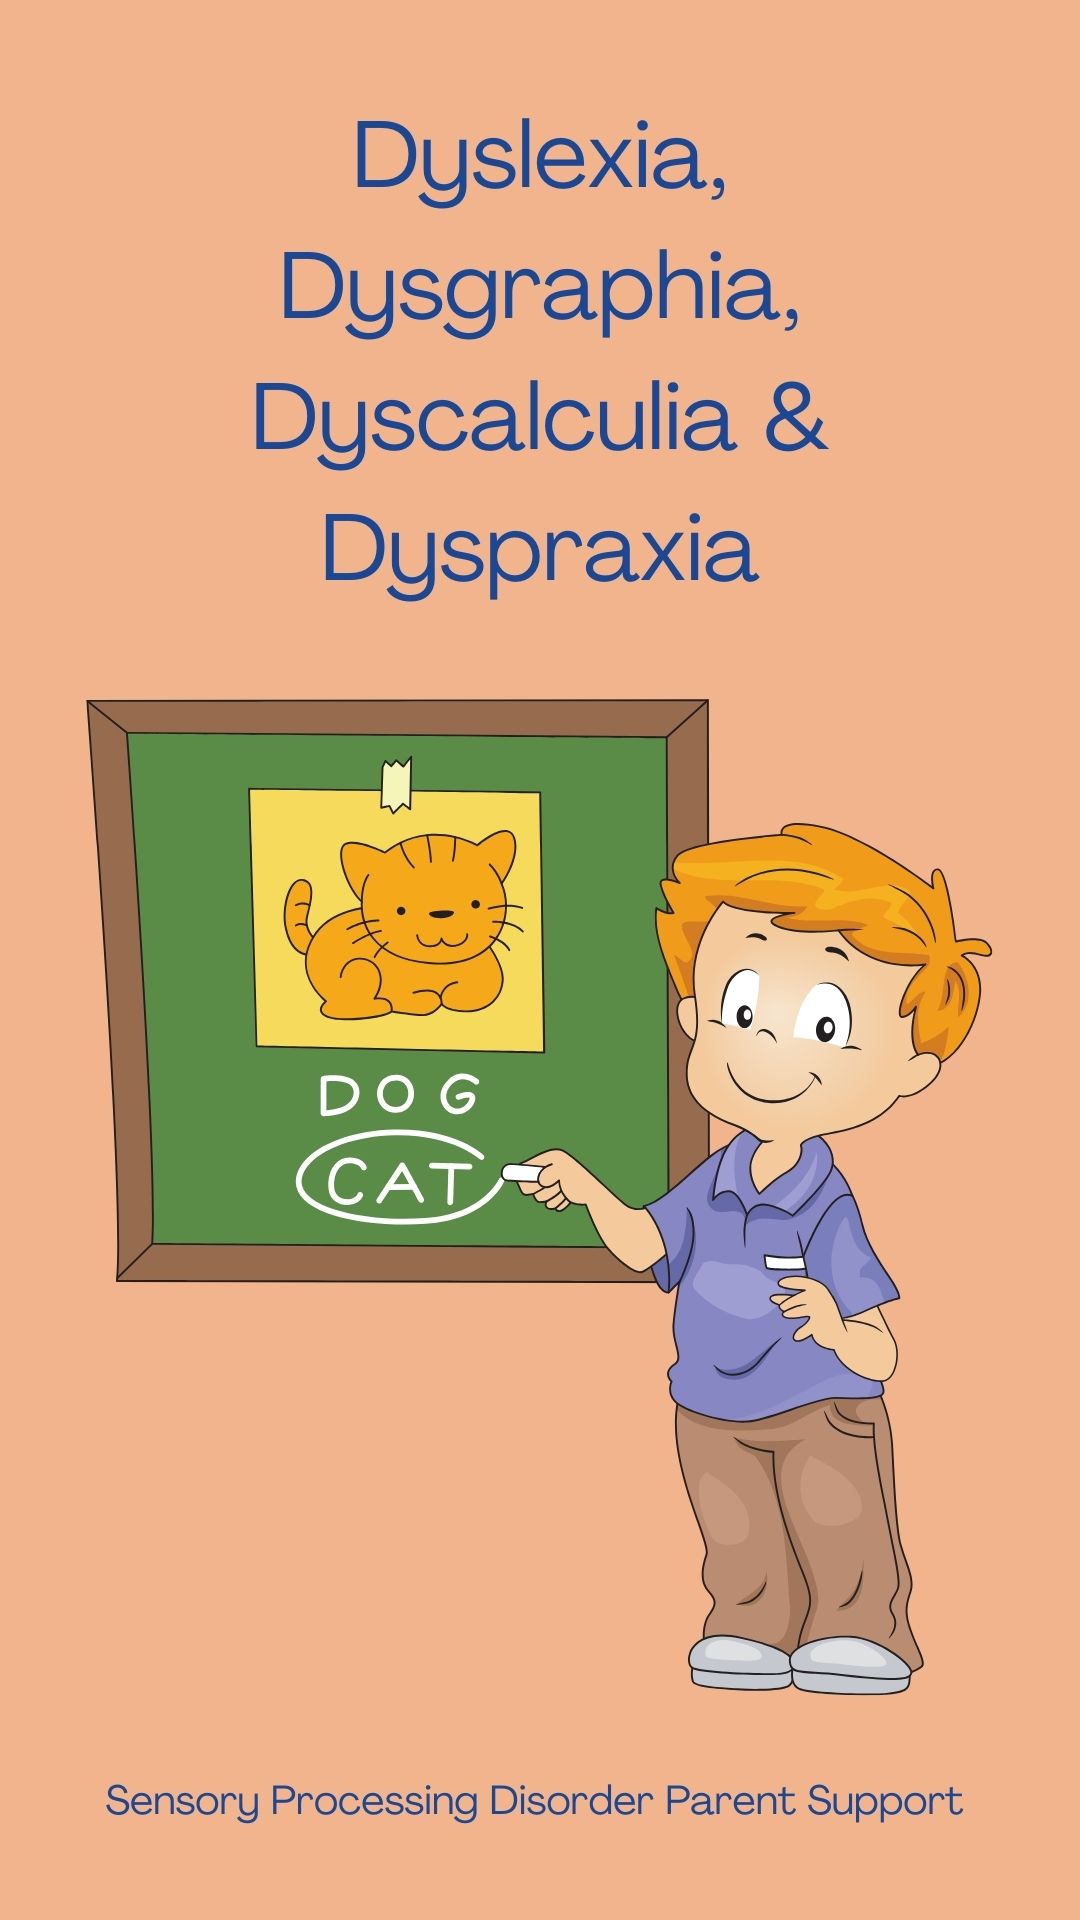 Dyslexia, Dysgraphia, Dyscalculia & Dyspraxia